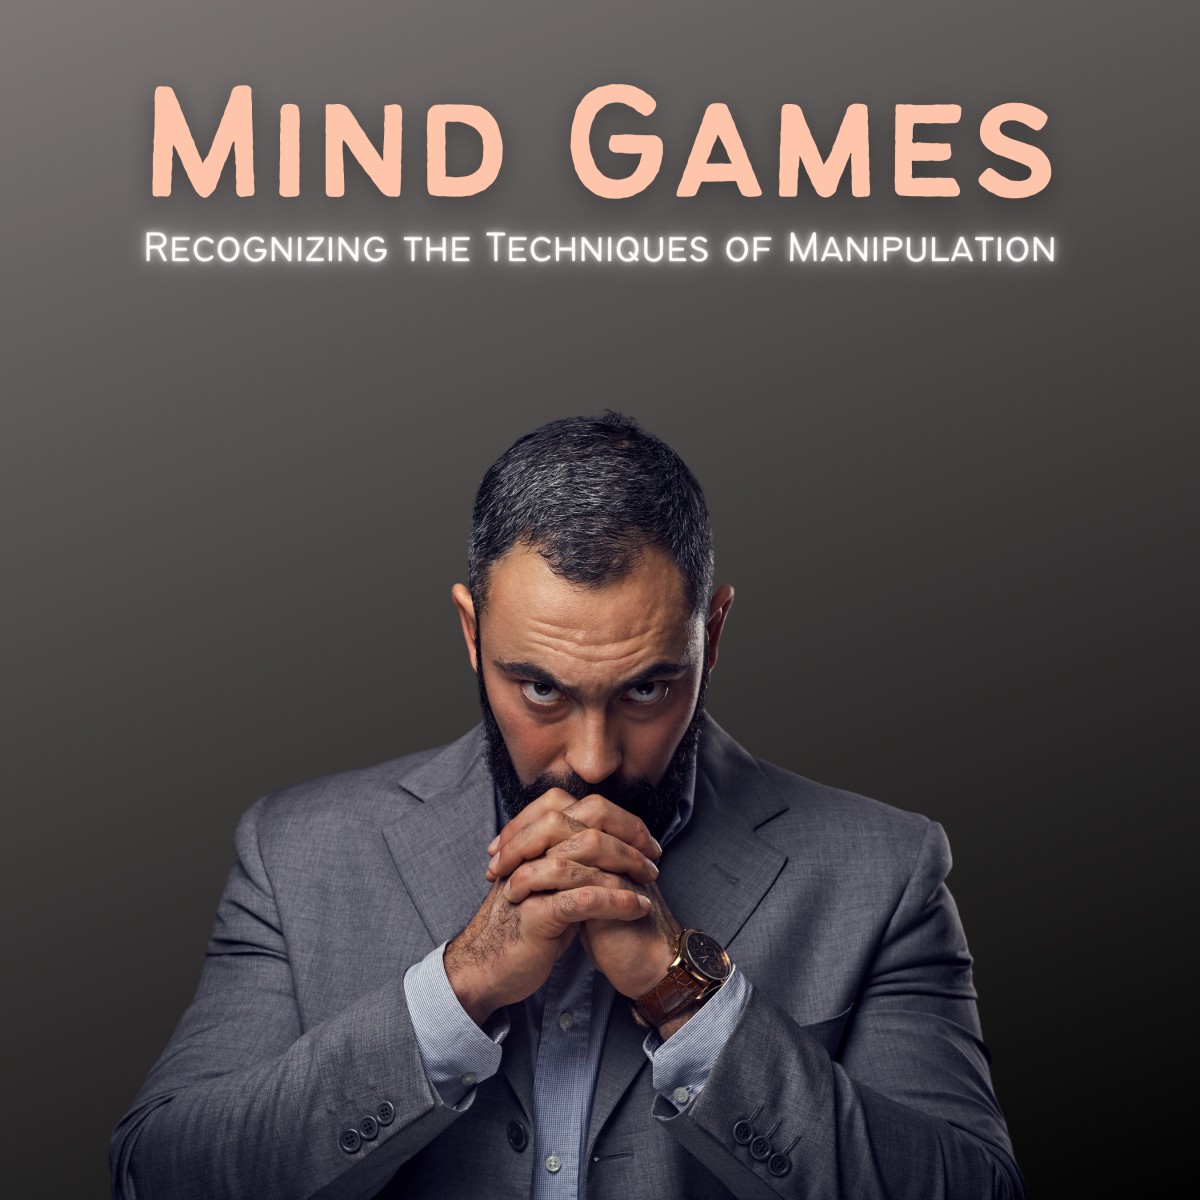 9 Psychological Seduction Manipulation Techniques